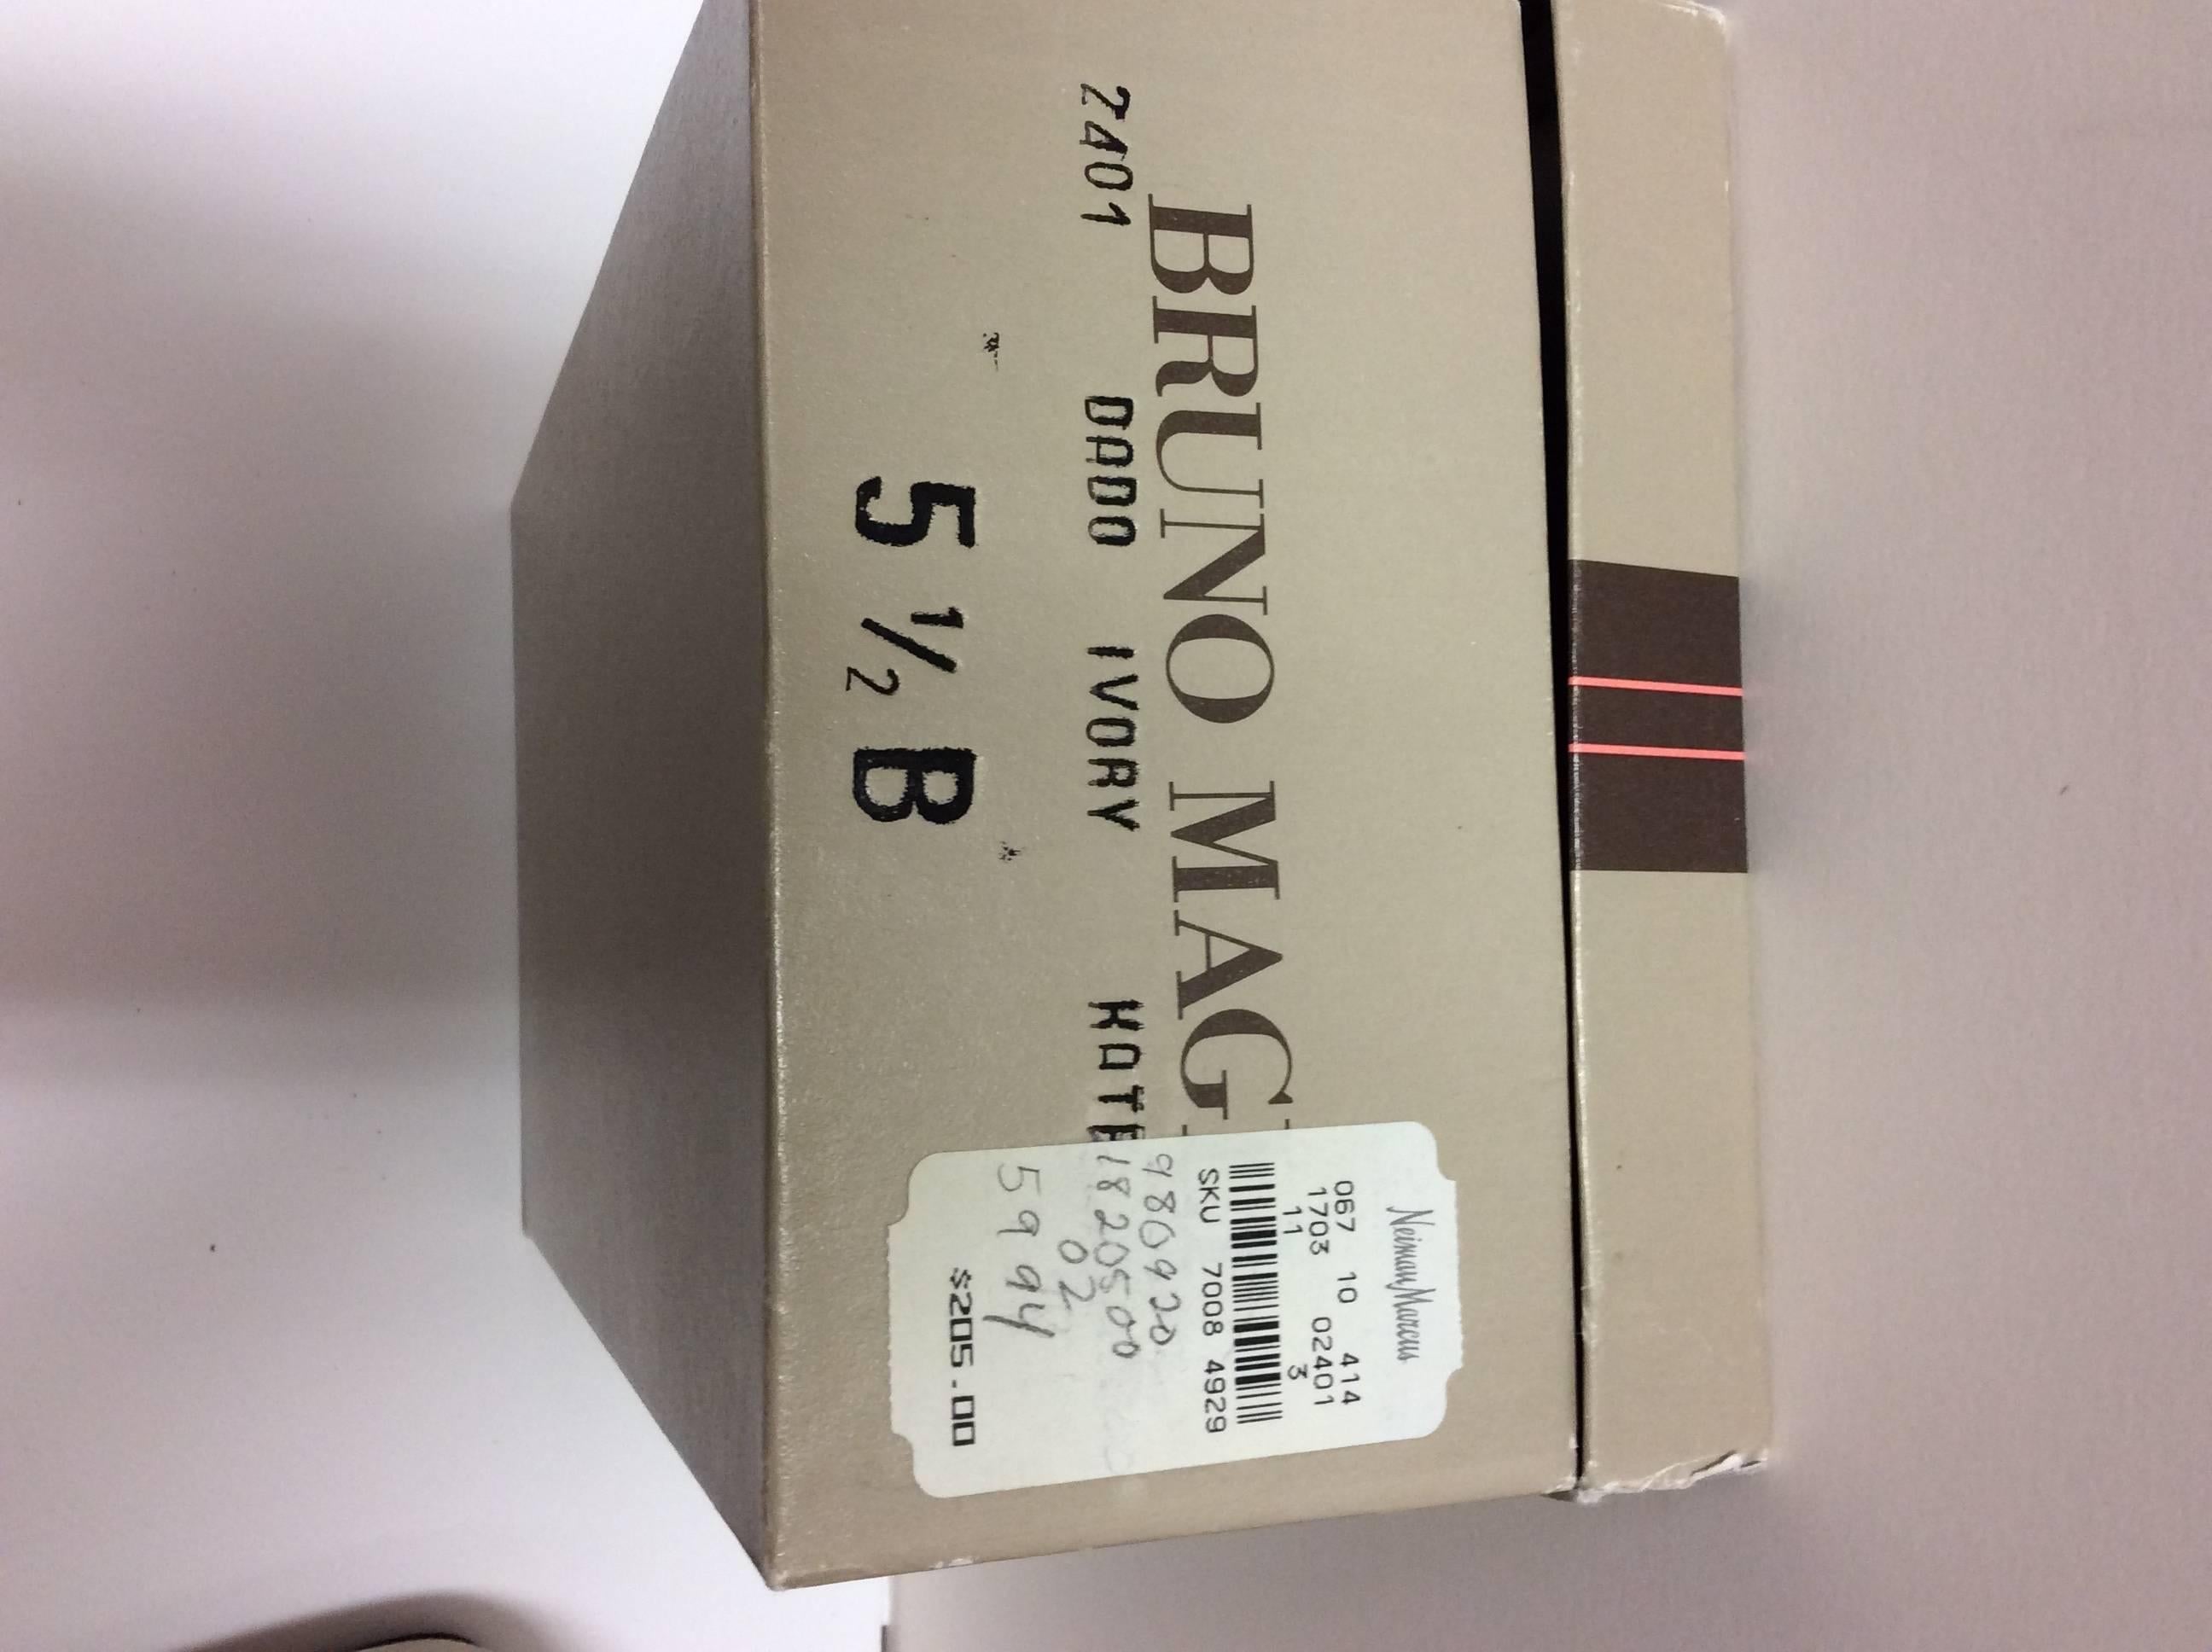 Bruno Magli Shoes - Cream Lizard - 1980's Shoes with Original Box In Excellent Condition For Sale In Boca Raton, FL